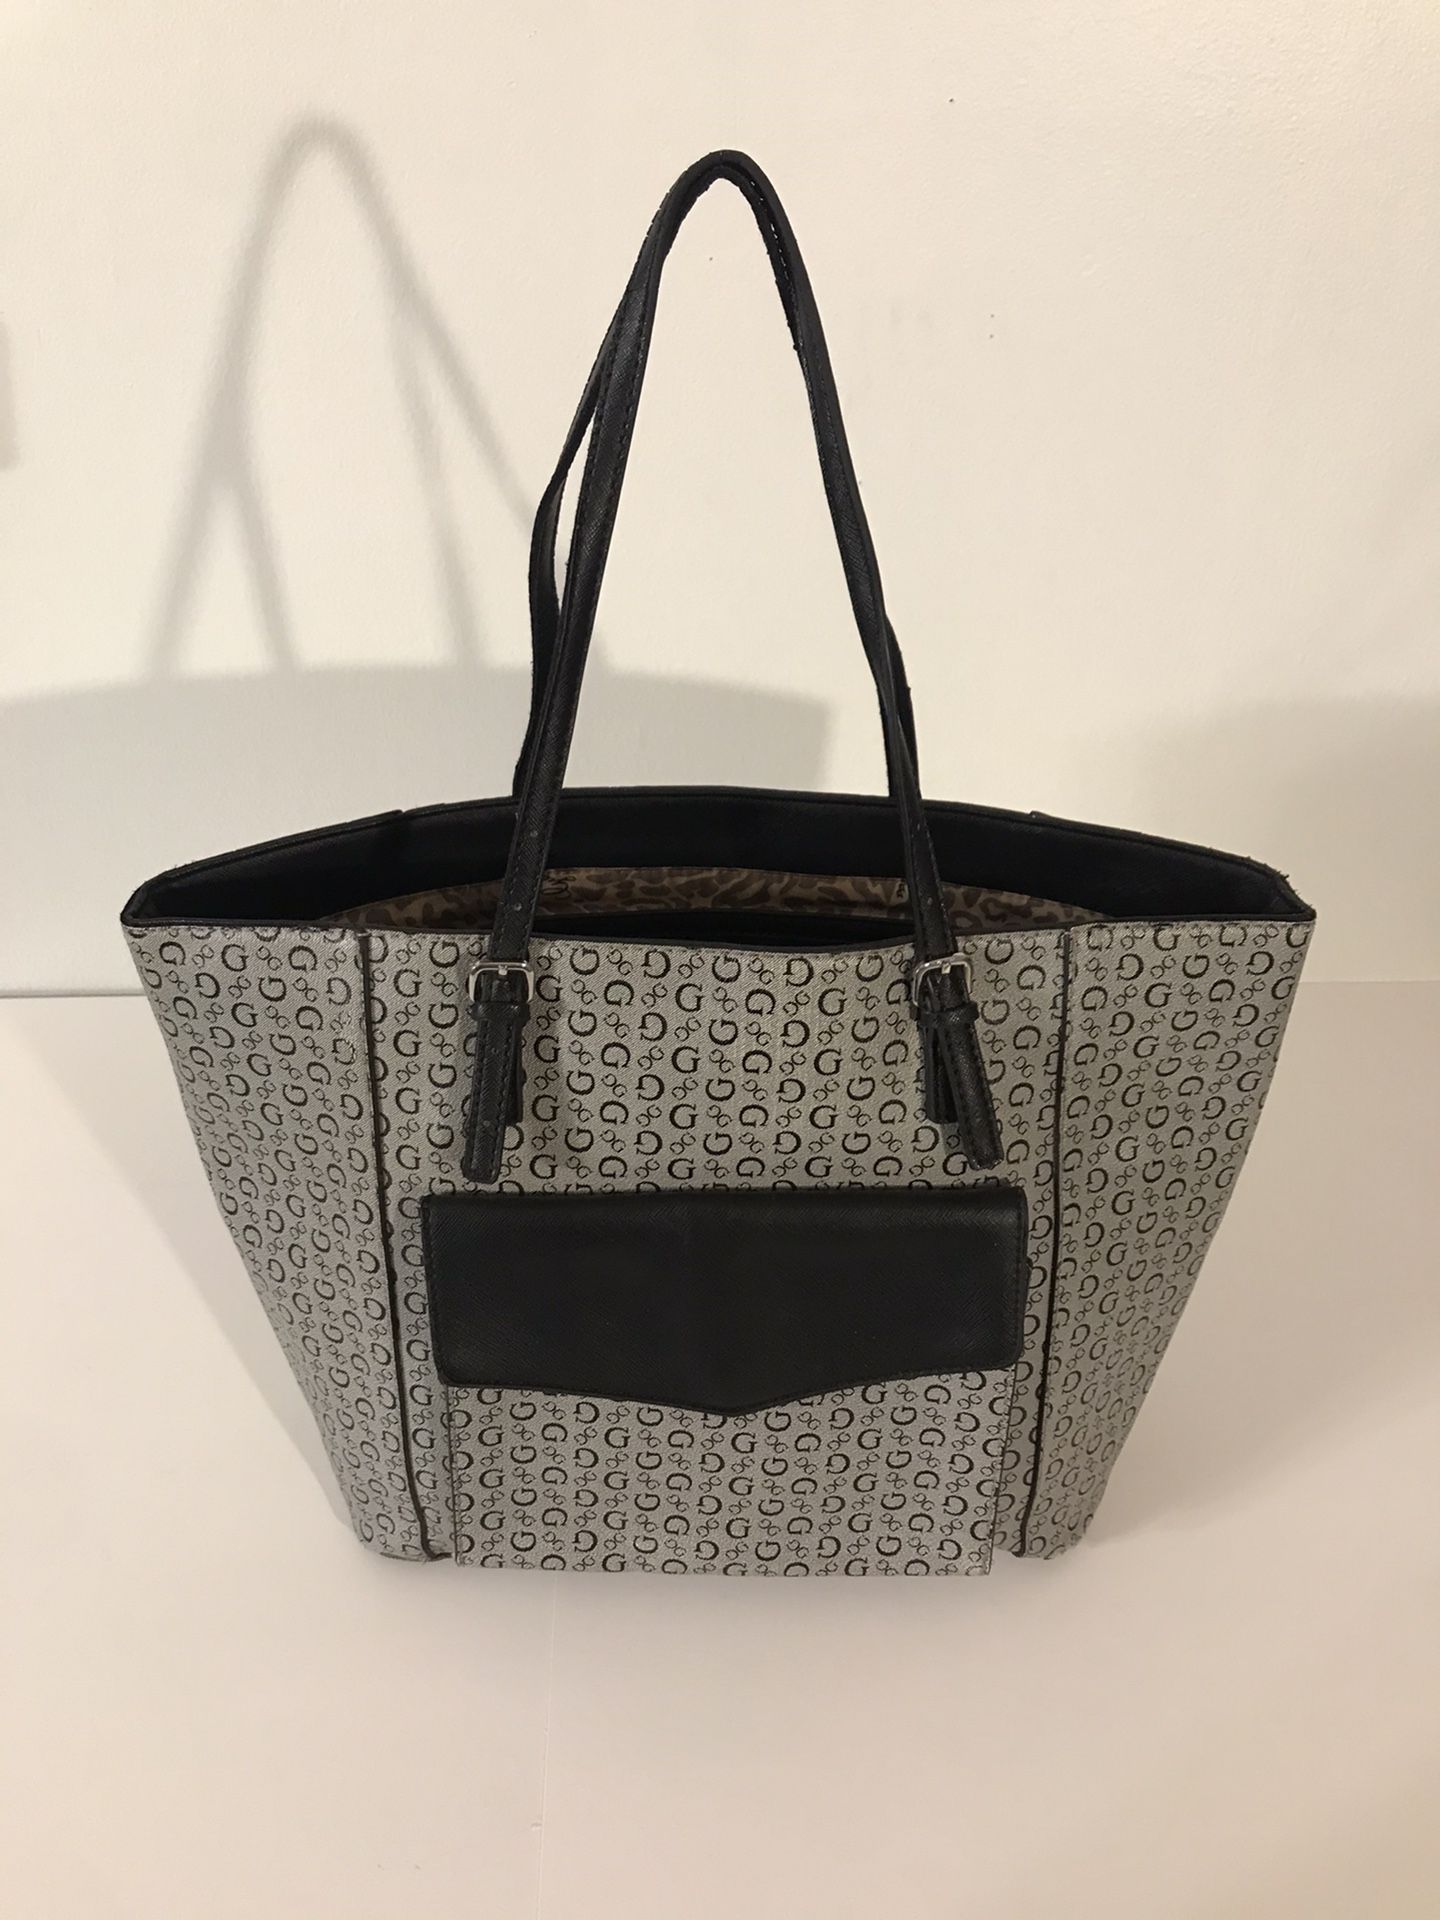 GUESS Gray & Black Large Tote Bag W/ GG Logo Design & Leopard Print Lining